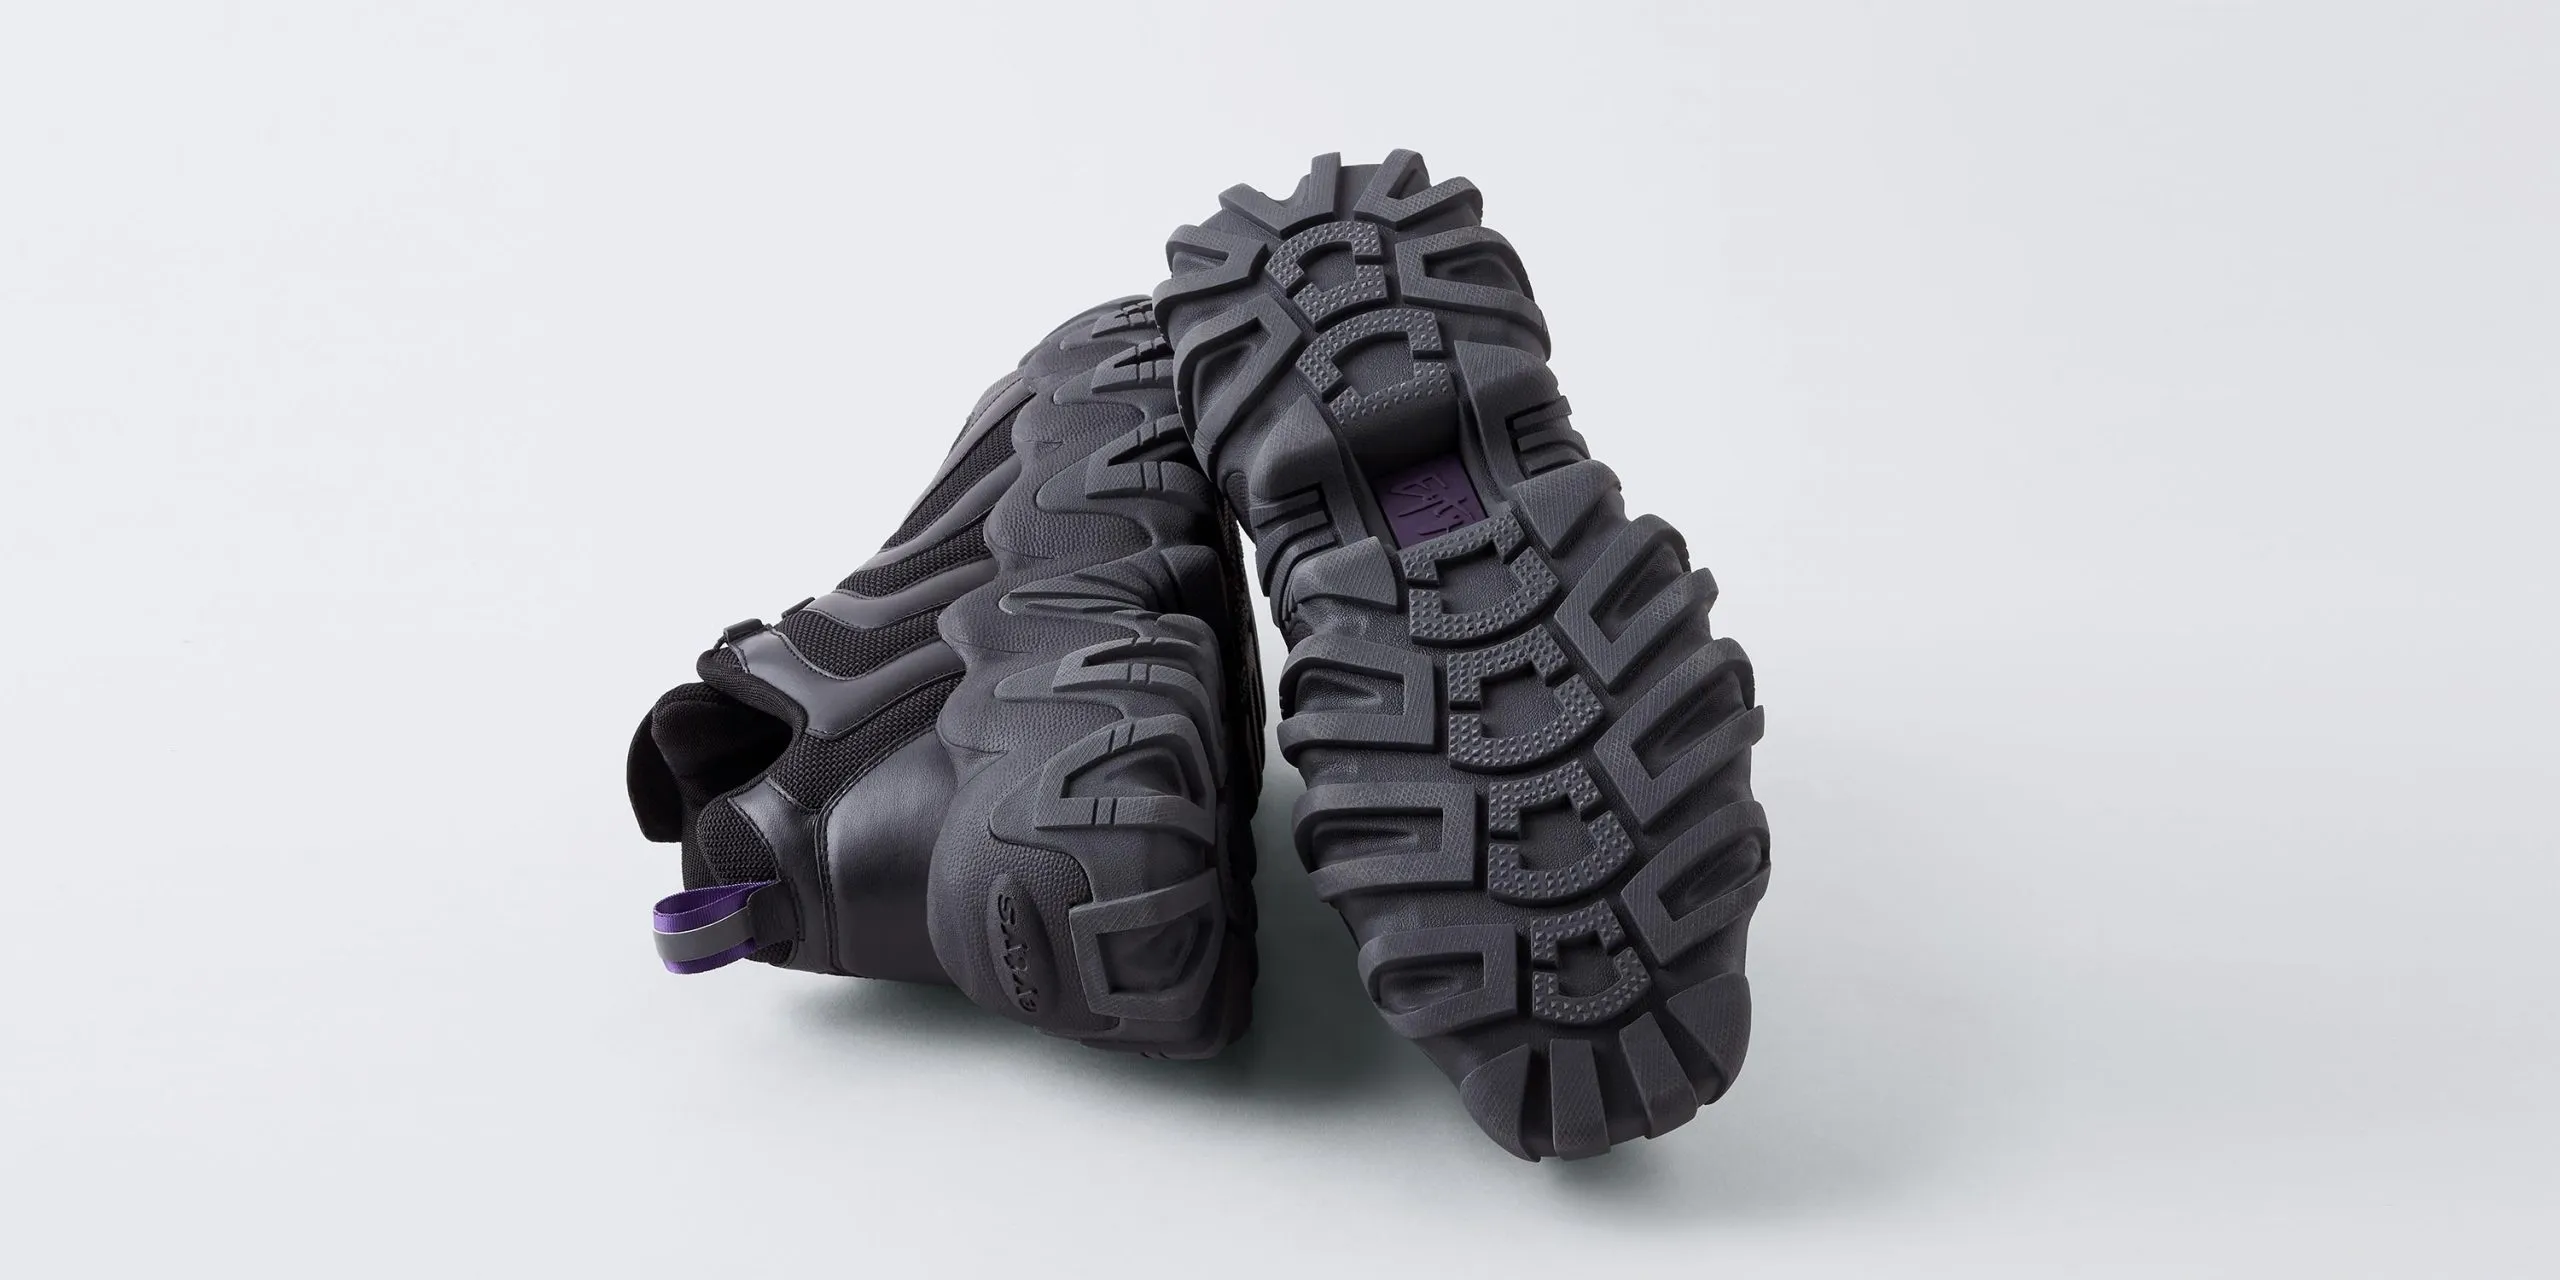 EYTYS Halo Leather Black Sneakers | EYTYS